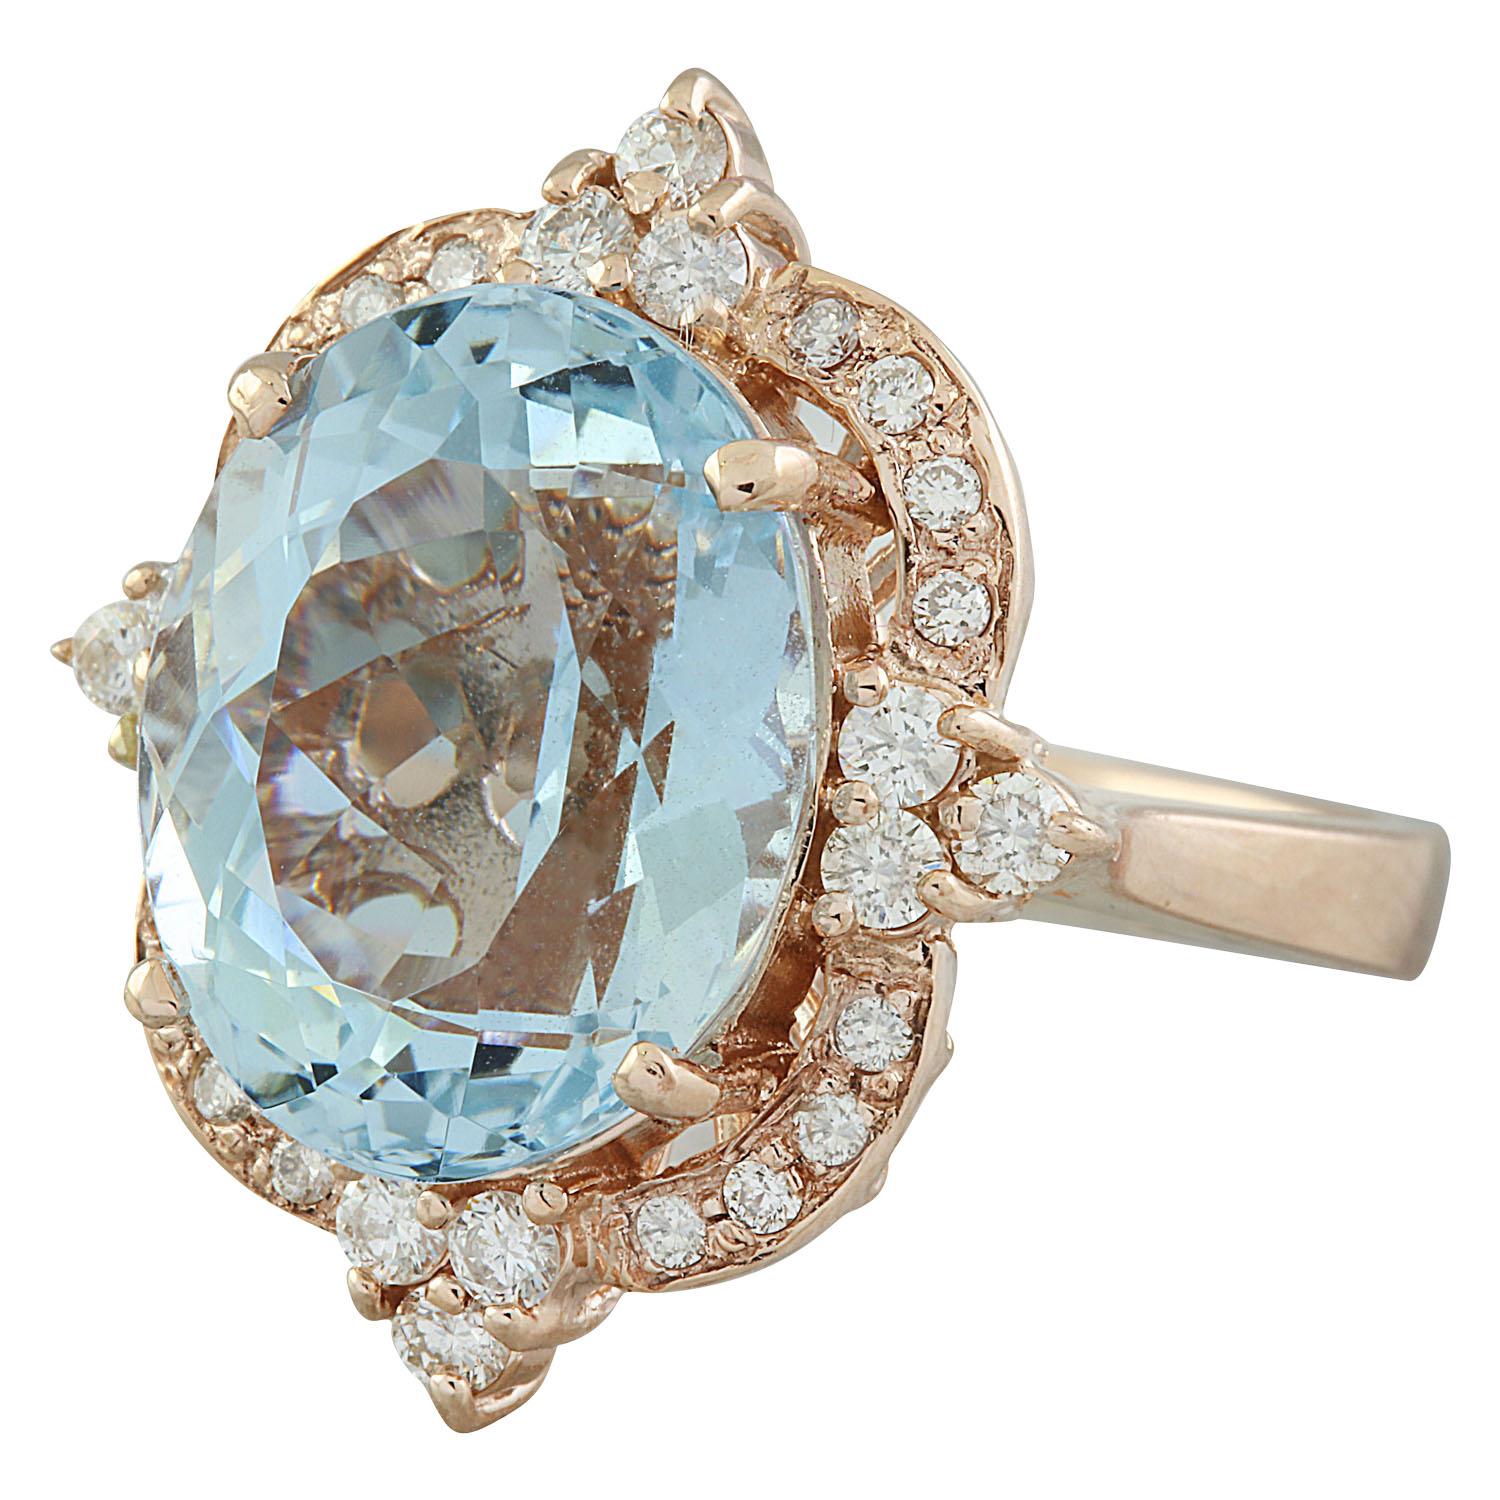 8.25 Carat Natural Aaqumarine 14 Karat Solid Rose Gold Diamond Ring
Stamped: 14K 
Total Ring Weight: 8.8 Grams 
Aquamarine Weight 7.60 Carat (15.00x12.00 Millimeters)
Diamond Weight: 0.65 carat (F-G Color, VS2-SI1 Clarity )
Face Measures: